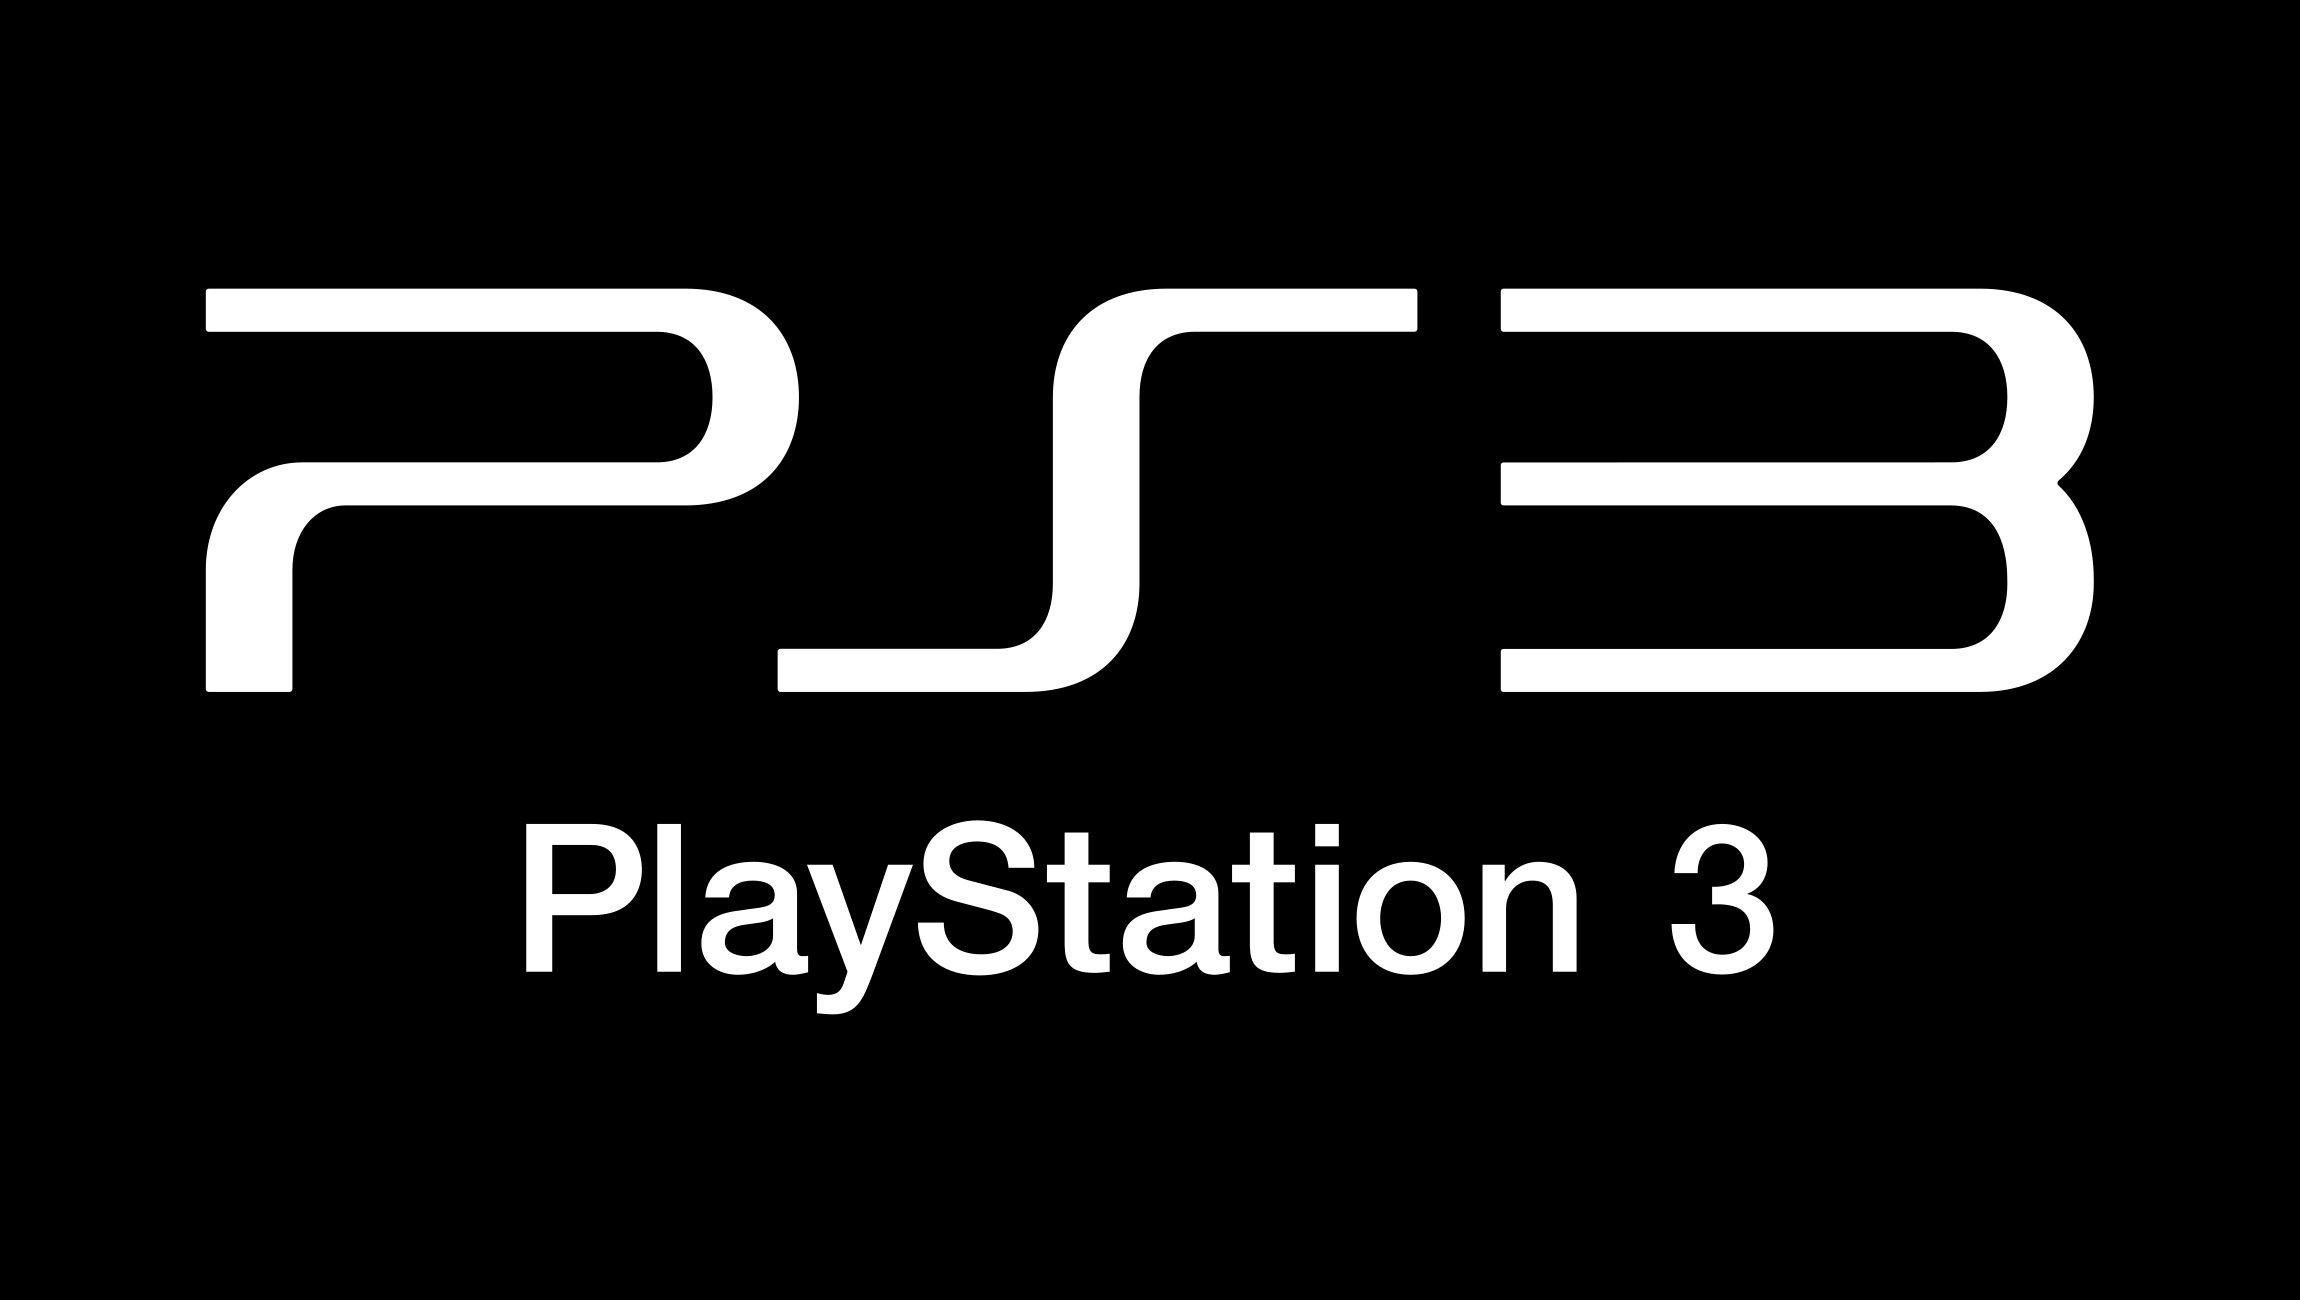 Blue and Yellow P Logo - PlayStation Logo, PlayStation Symbol, History and Evolution